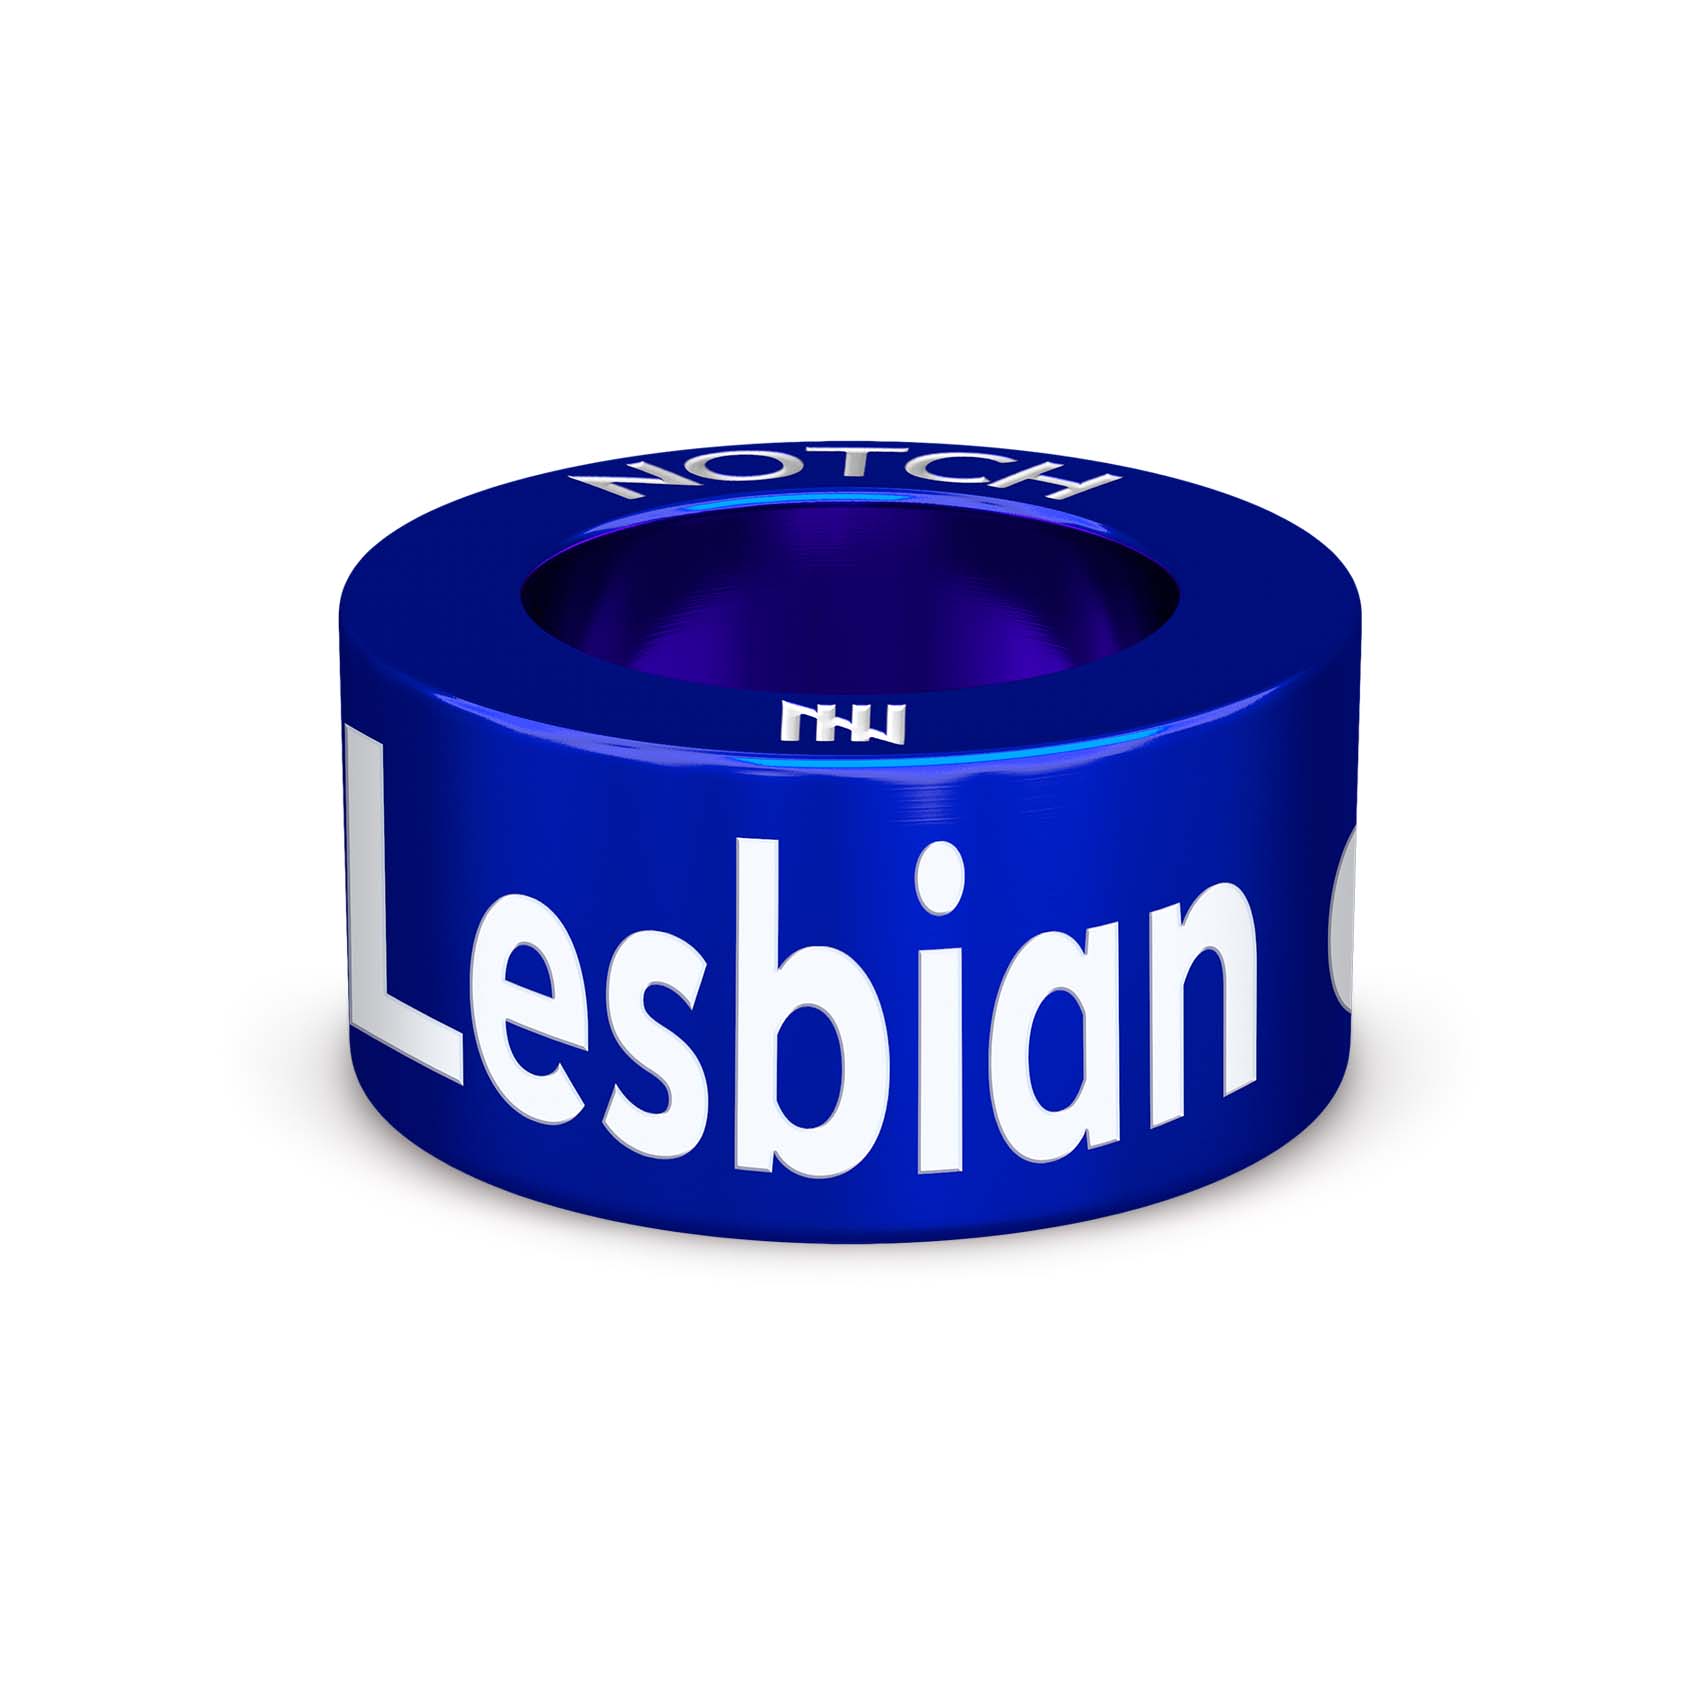 Lesbian and Proud NOTCH Charm